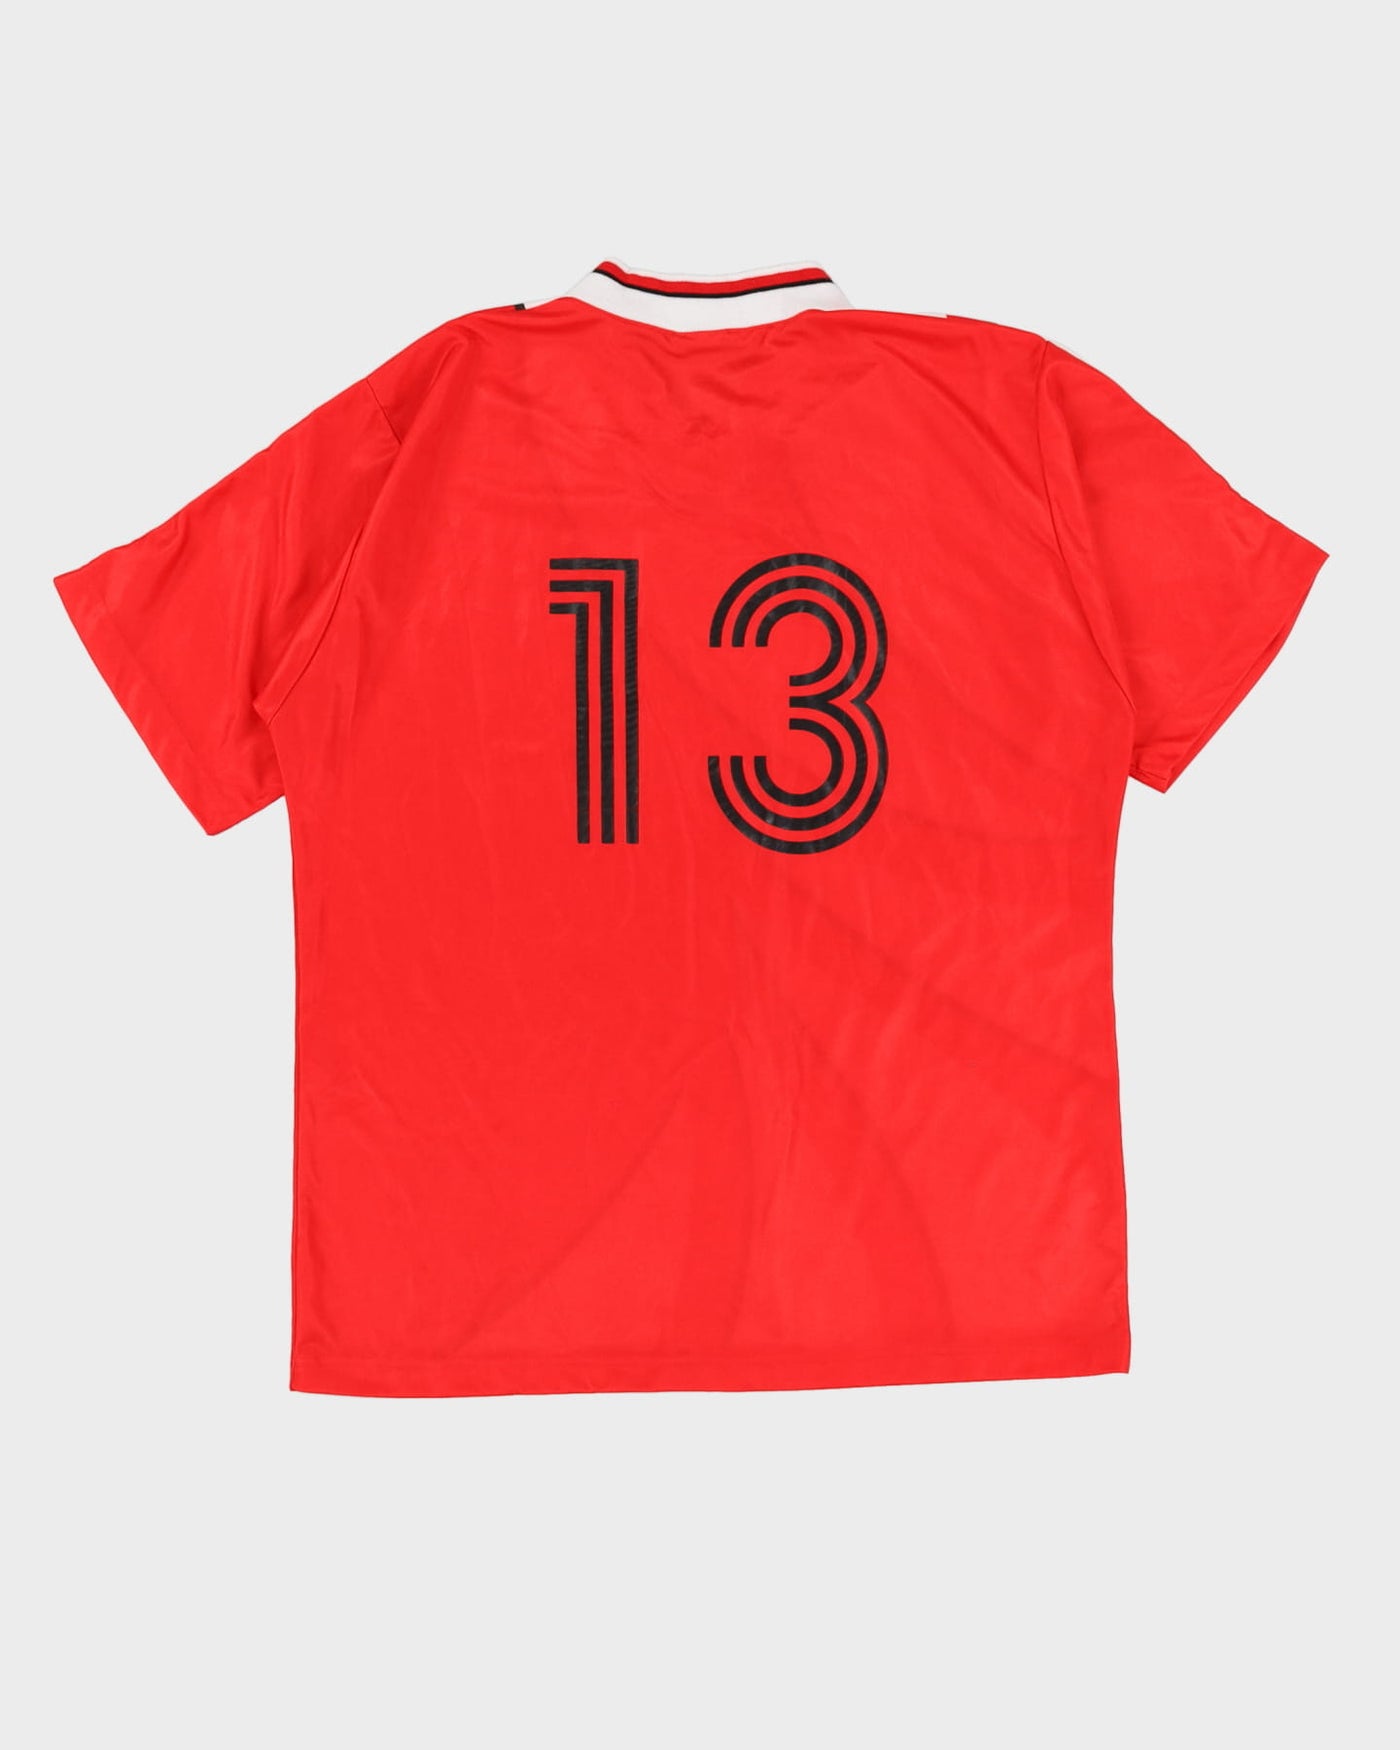 90s PUMA Red / White Training Football Shirt / Jersey - XL